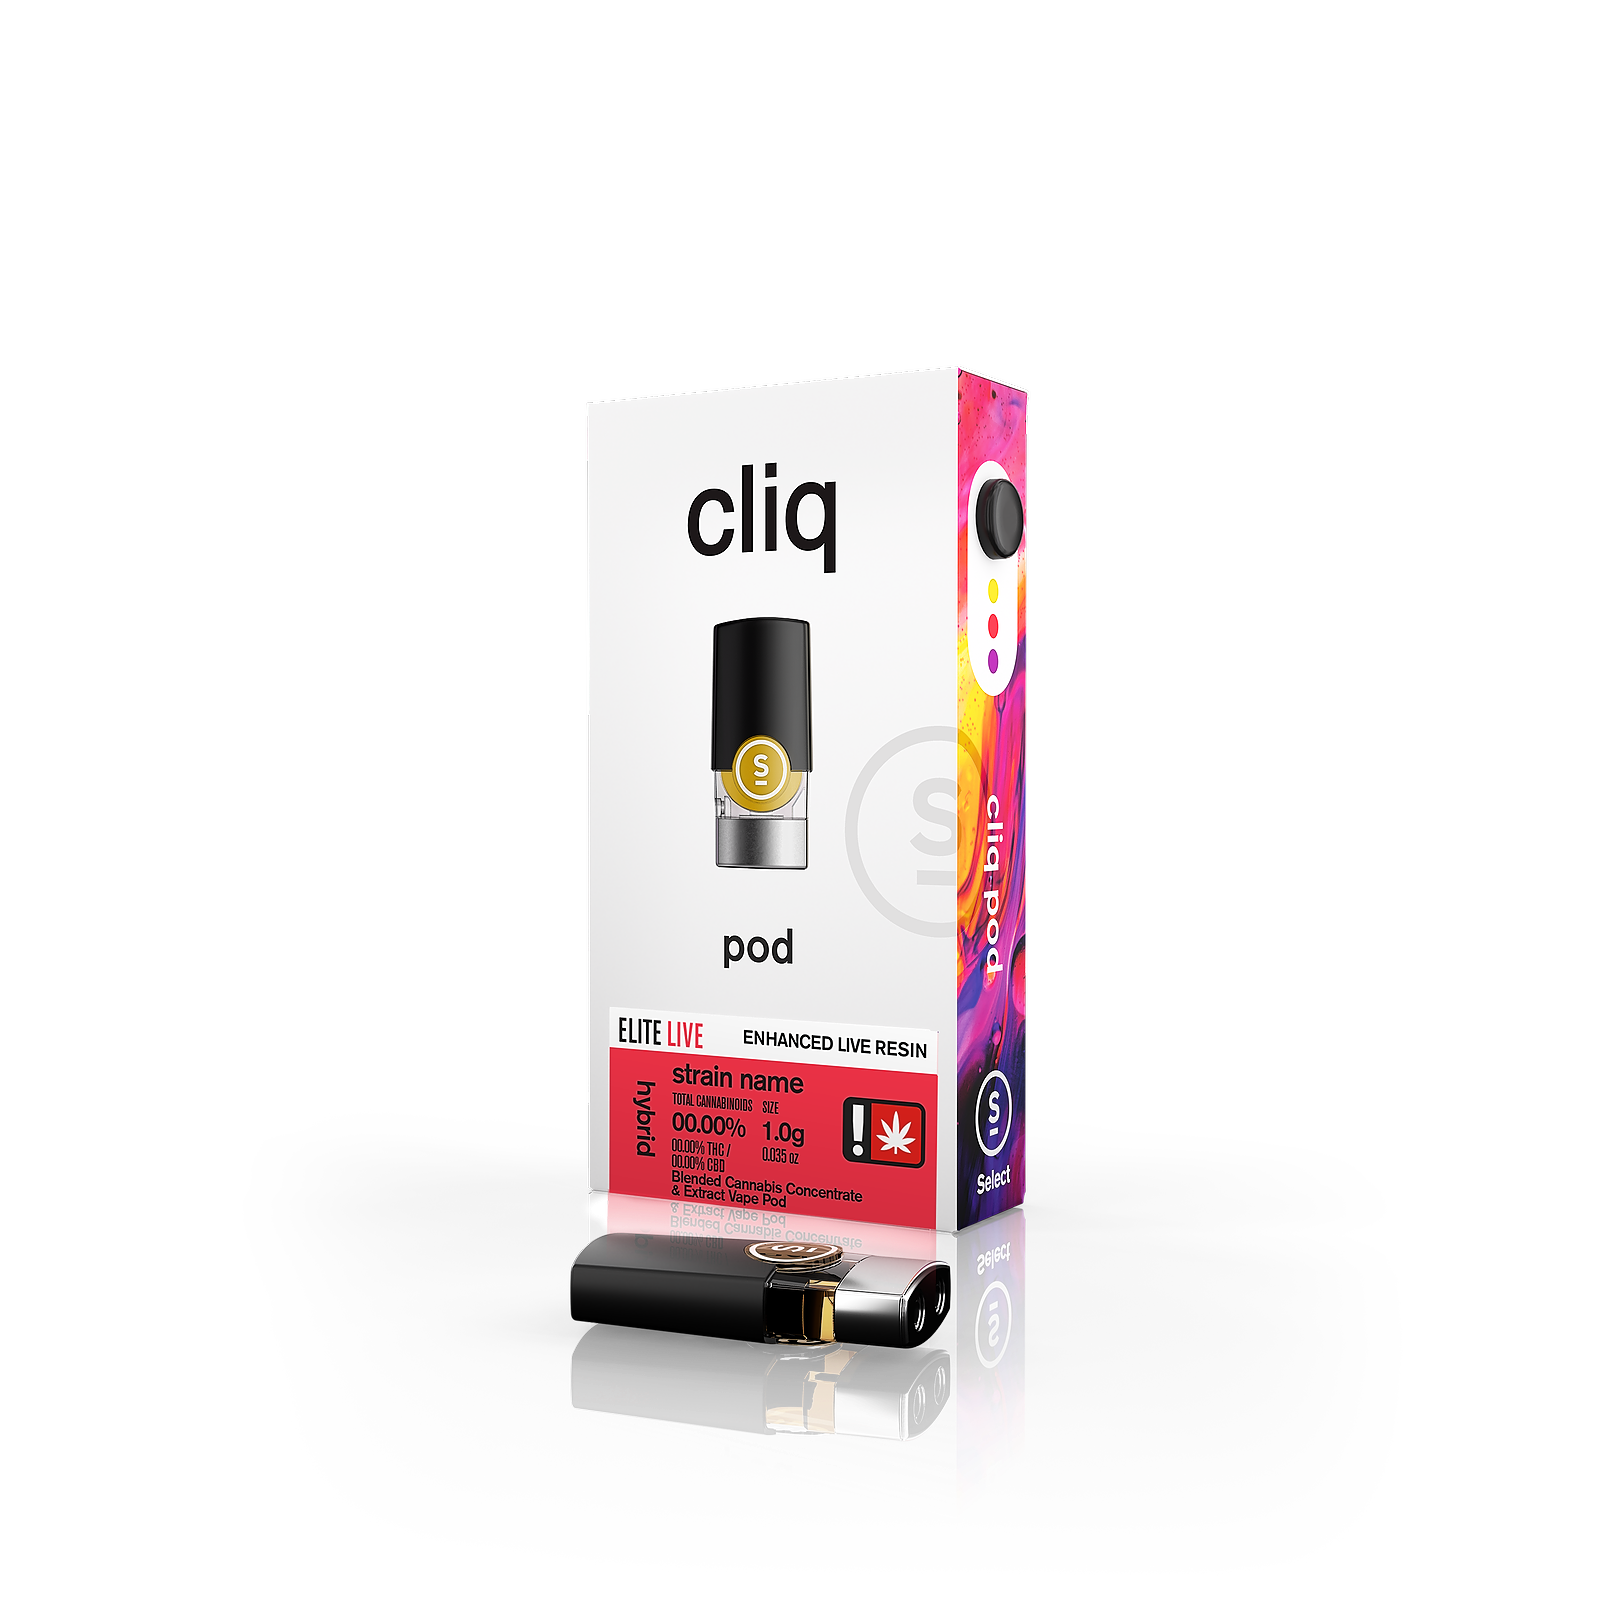 Select Elite Live Cliq Pod 1g Mac Express - Hybrid